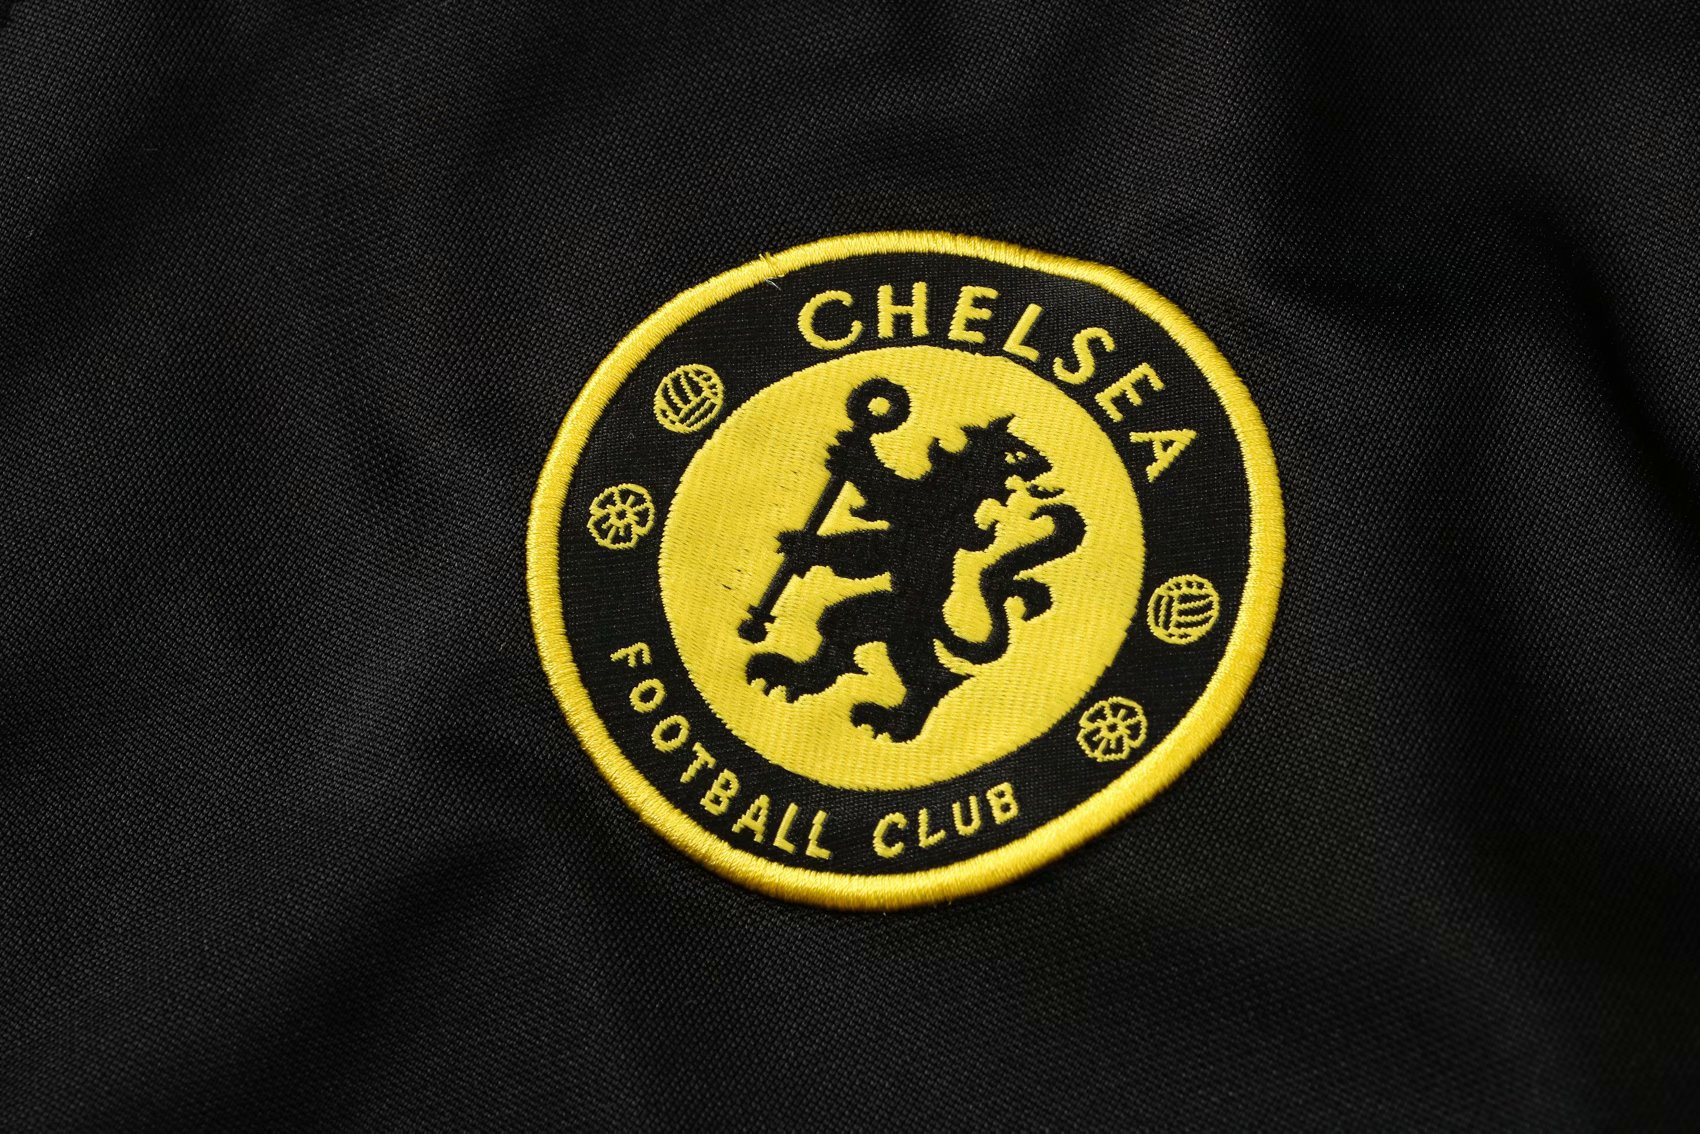 Chelsea 2021/22 Black II Soccer Training Suit (Jacket + Pants) Mens